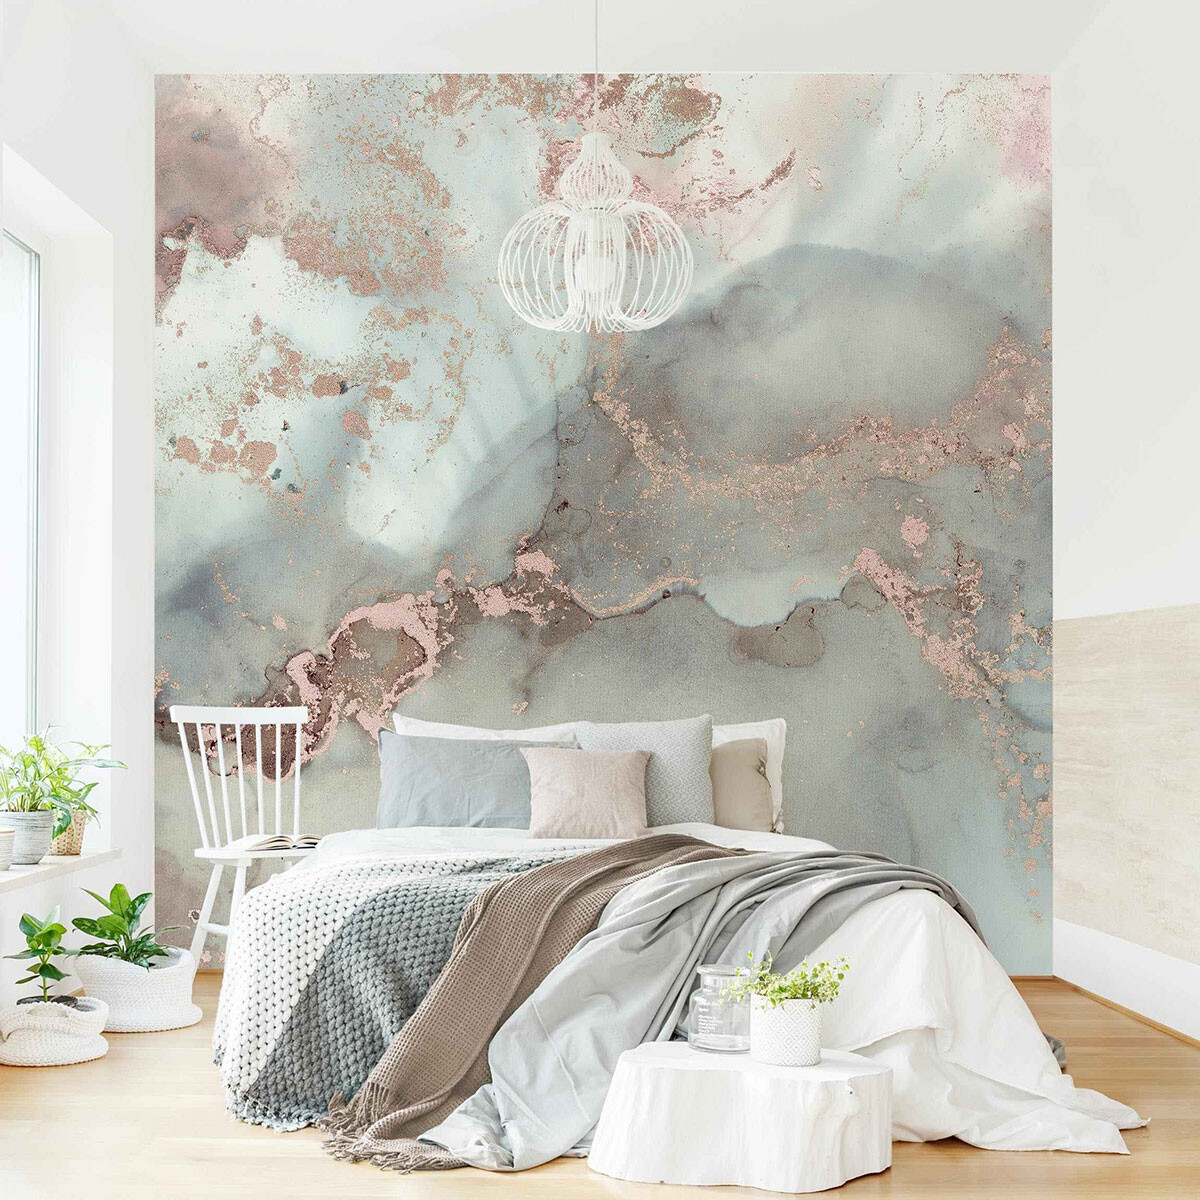 Schlafzimmer Tapete modern – Farbexperimente Marmor Pastell und Gold